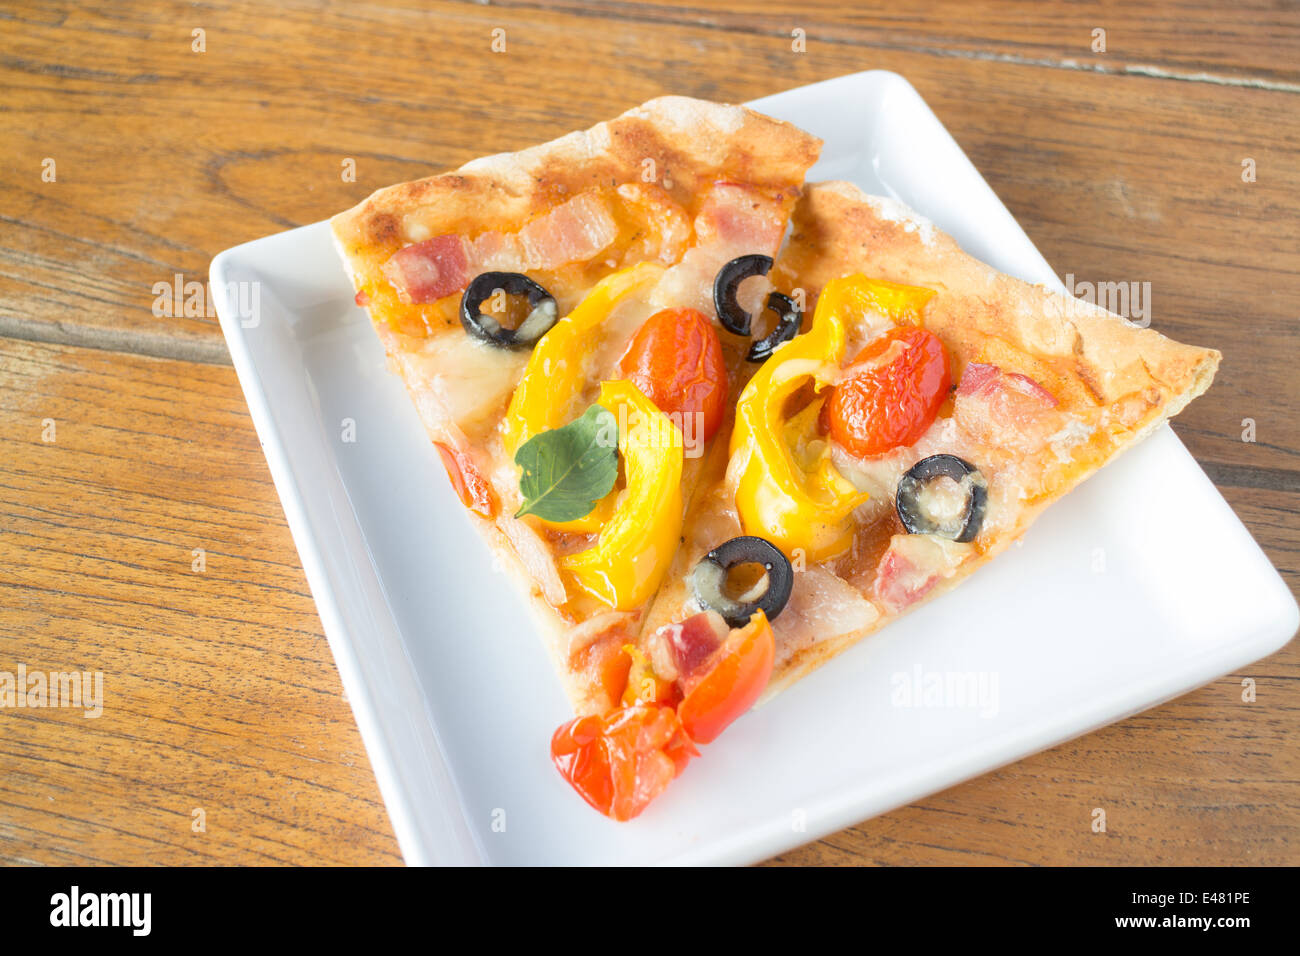 Pizza casera con vegetales frescos topping, Stock Photo Foto de stock